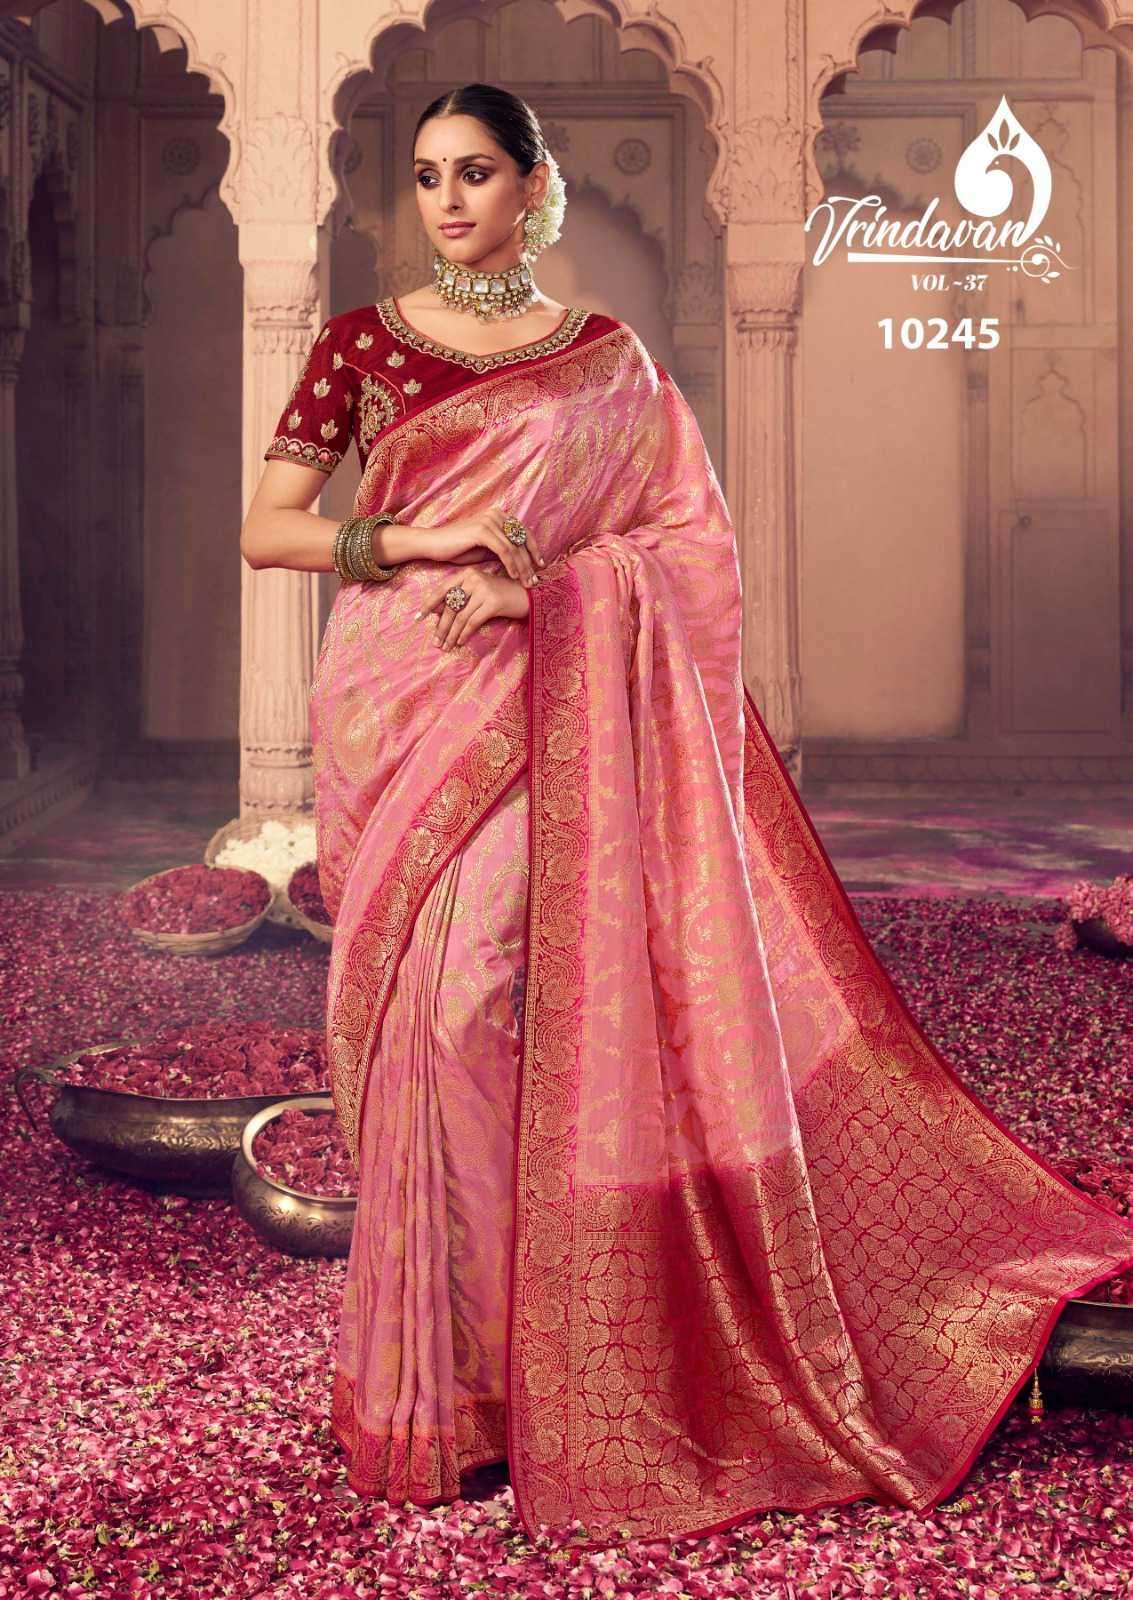 Royal Vrindavan Vol 37 10240 To 10248 Nx Designer Silk Partywear Saree New Arrivals